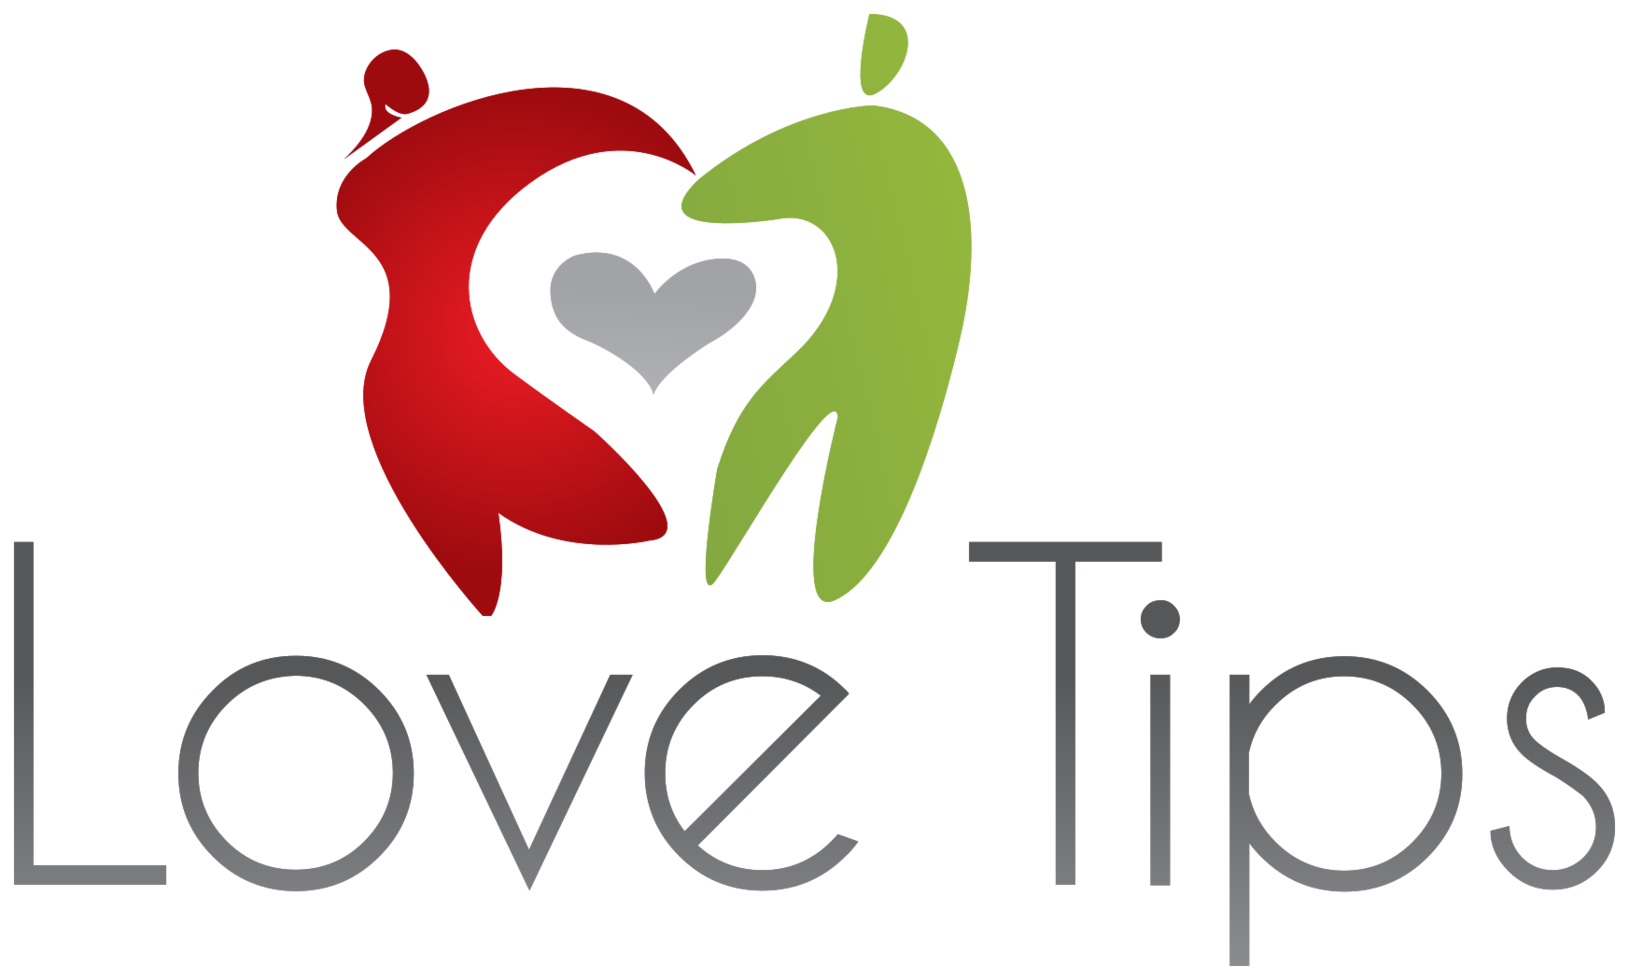 liefde tips logo png